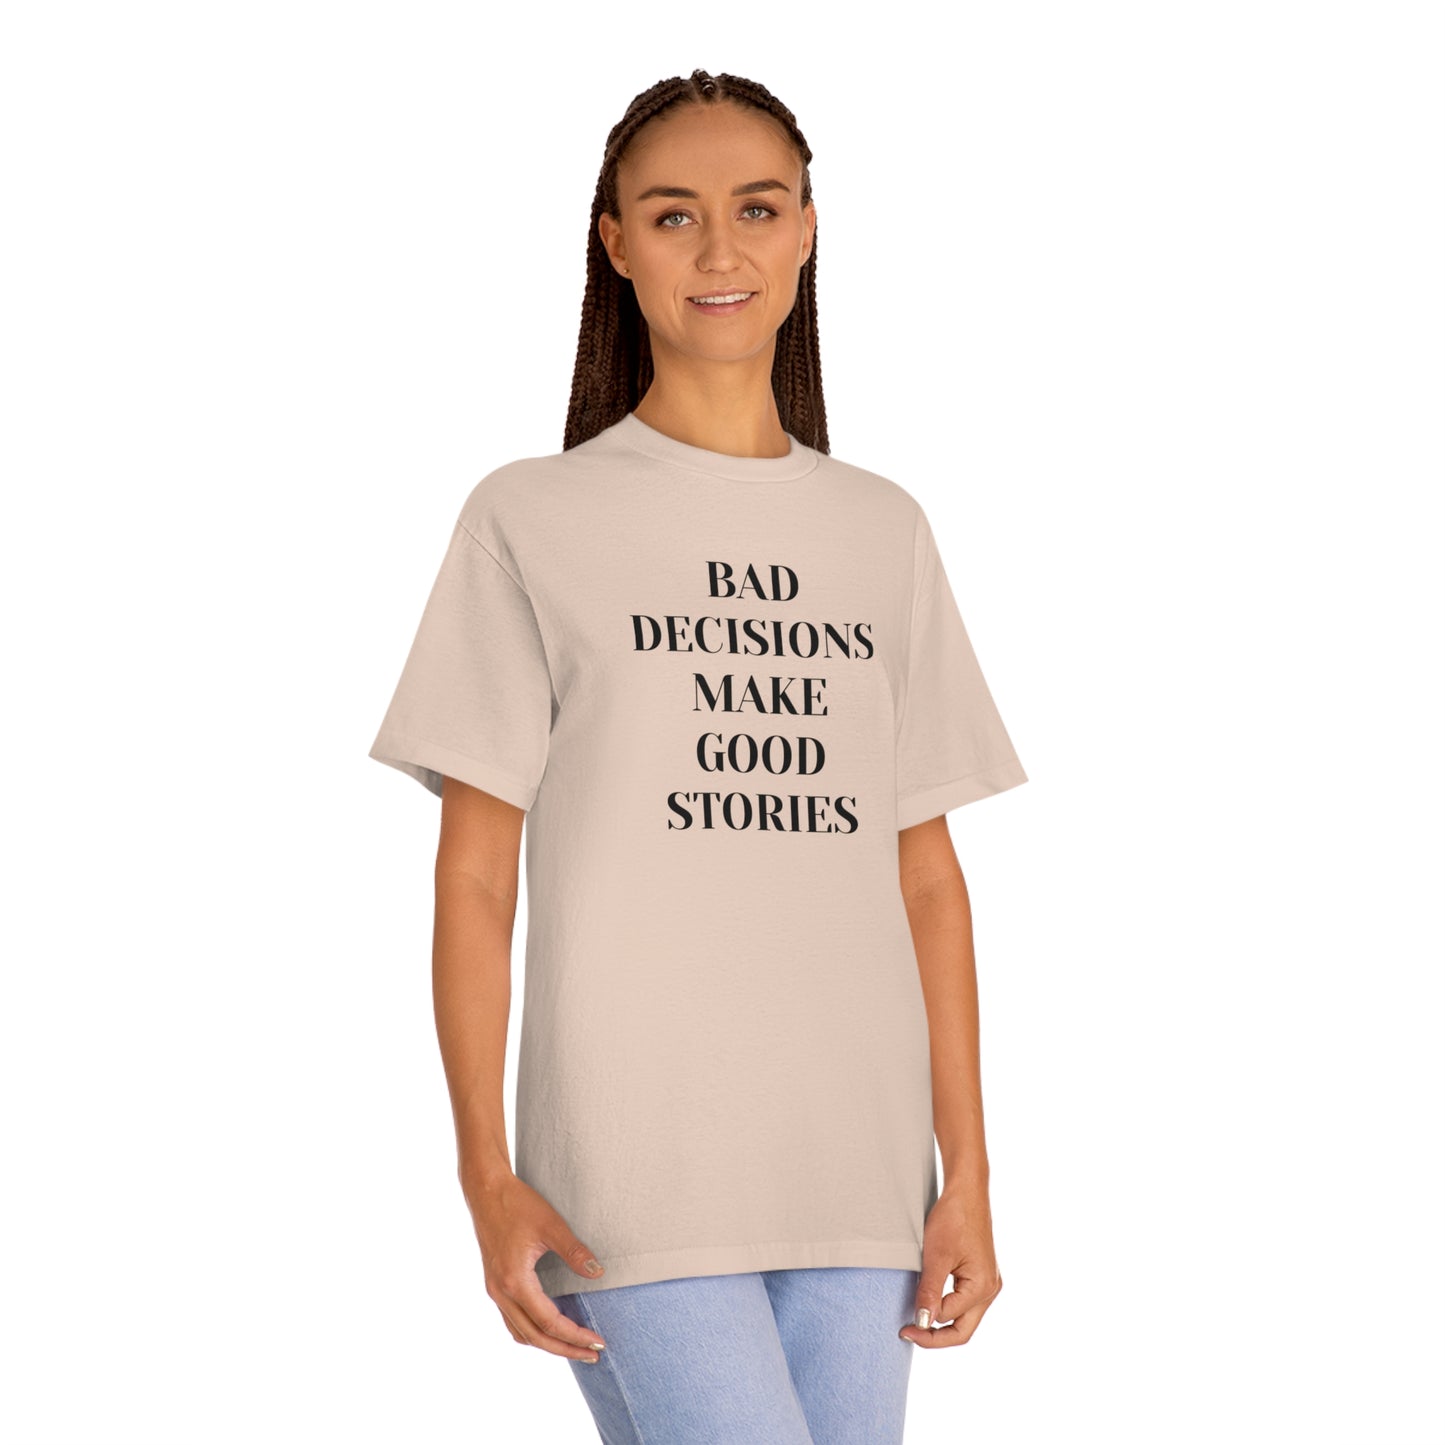 Bad Decisions Make Good Stories Funny T-shirt